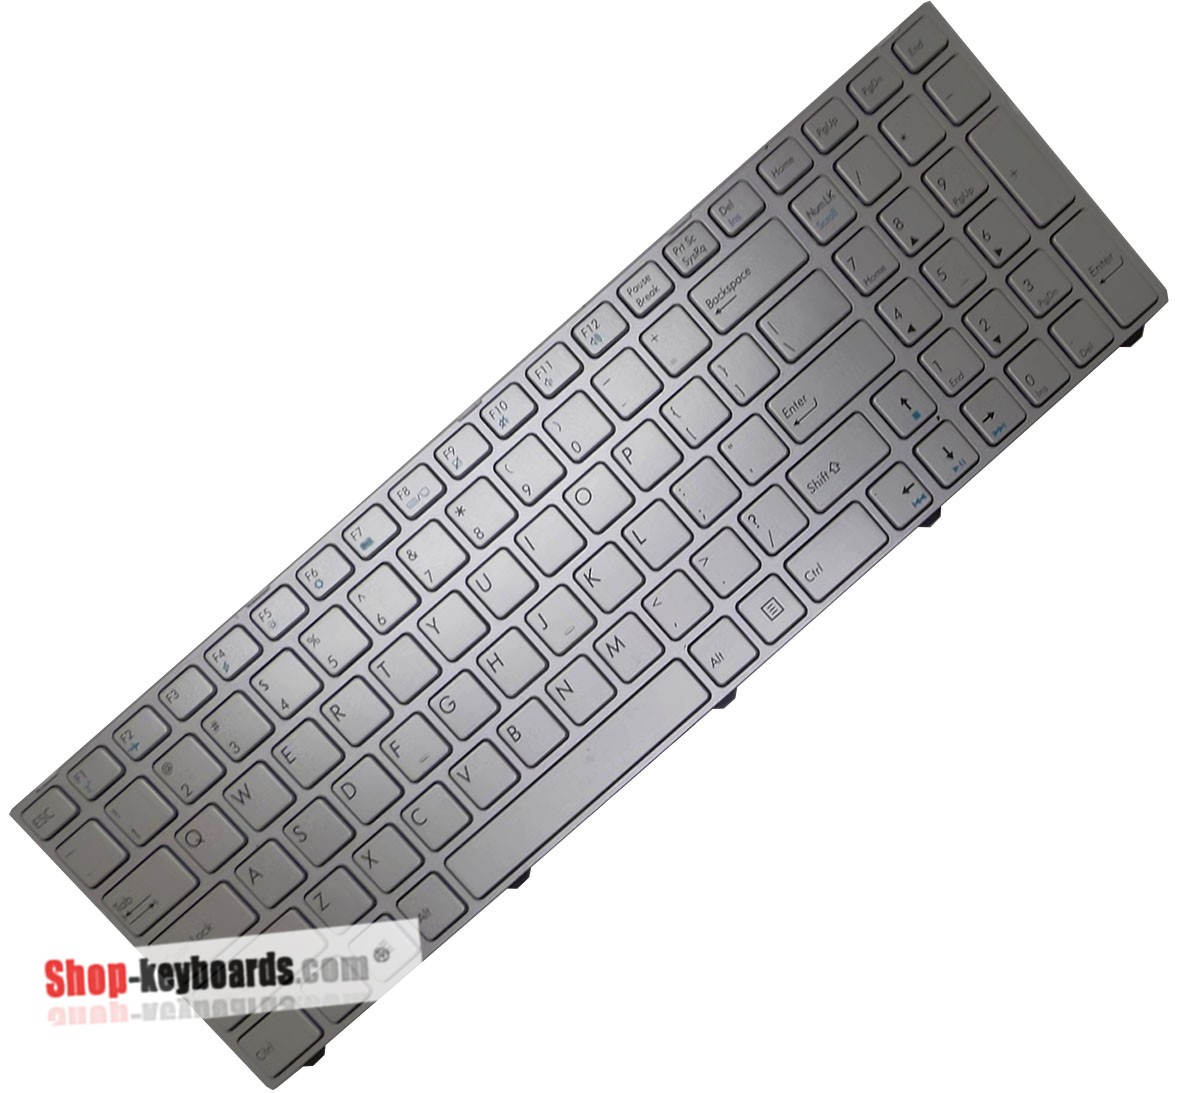 Medion AKOYA E7425 Keyboard replacement